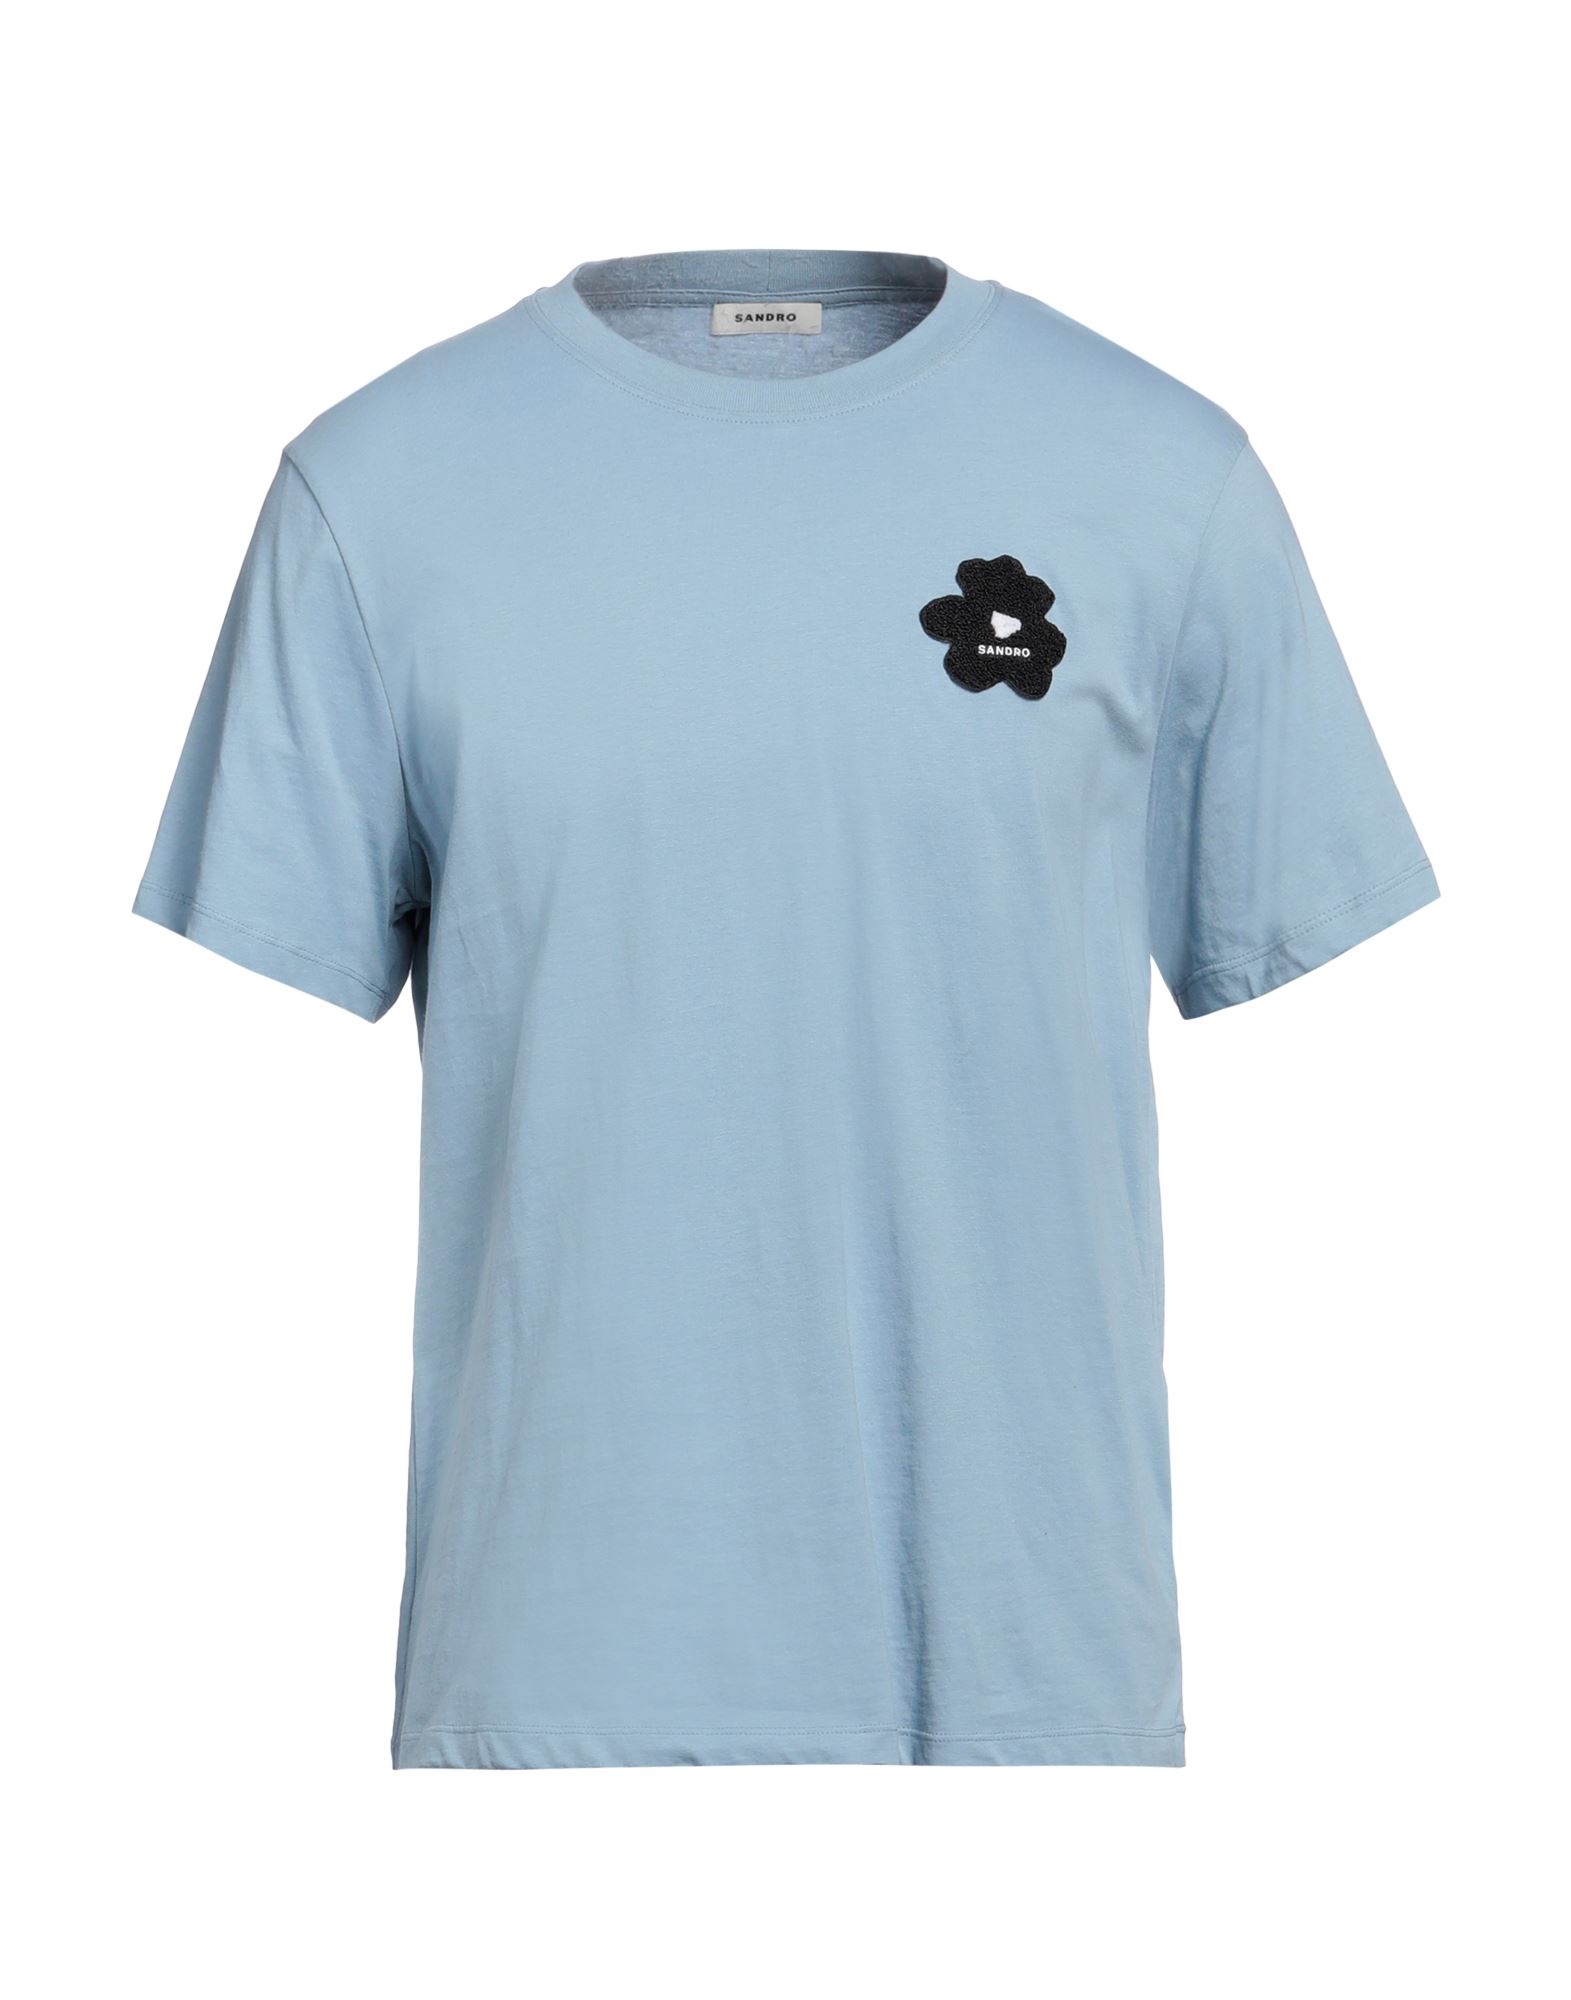 SANDRO T-shirts Herren Taubenblau von SANDRO